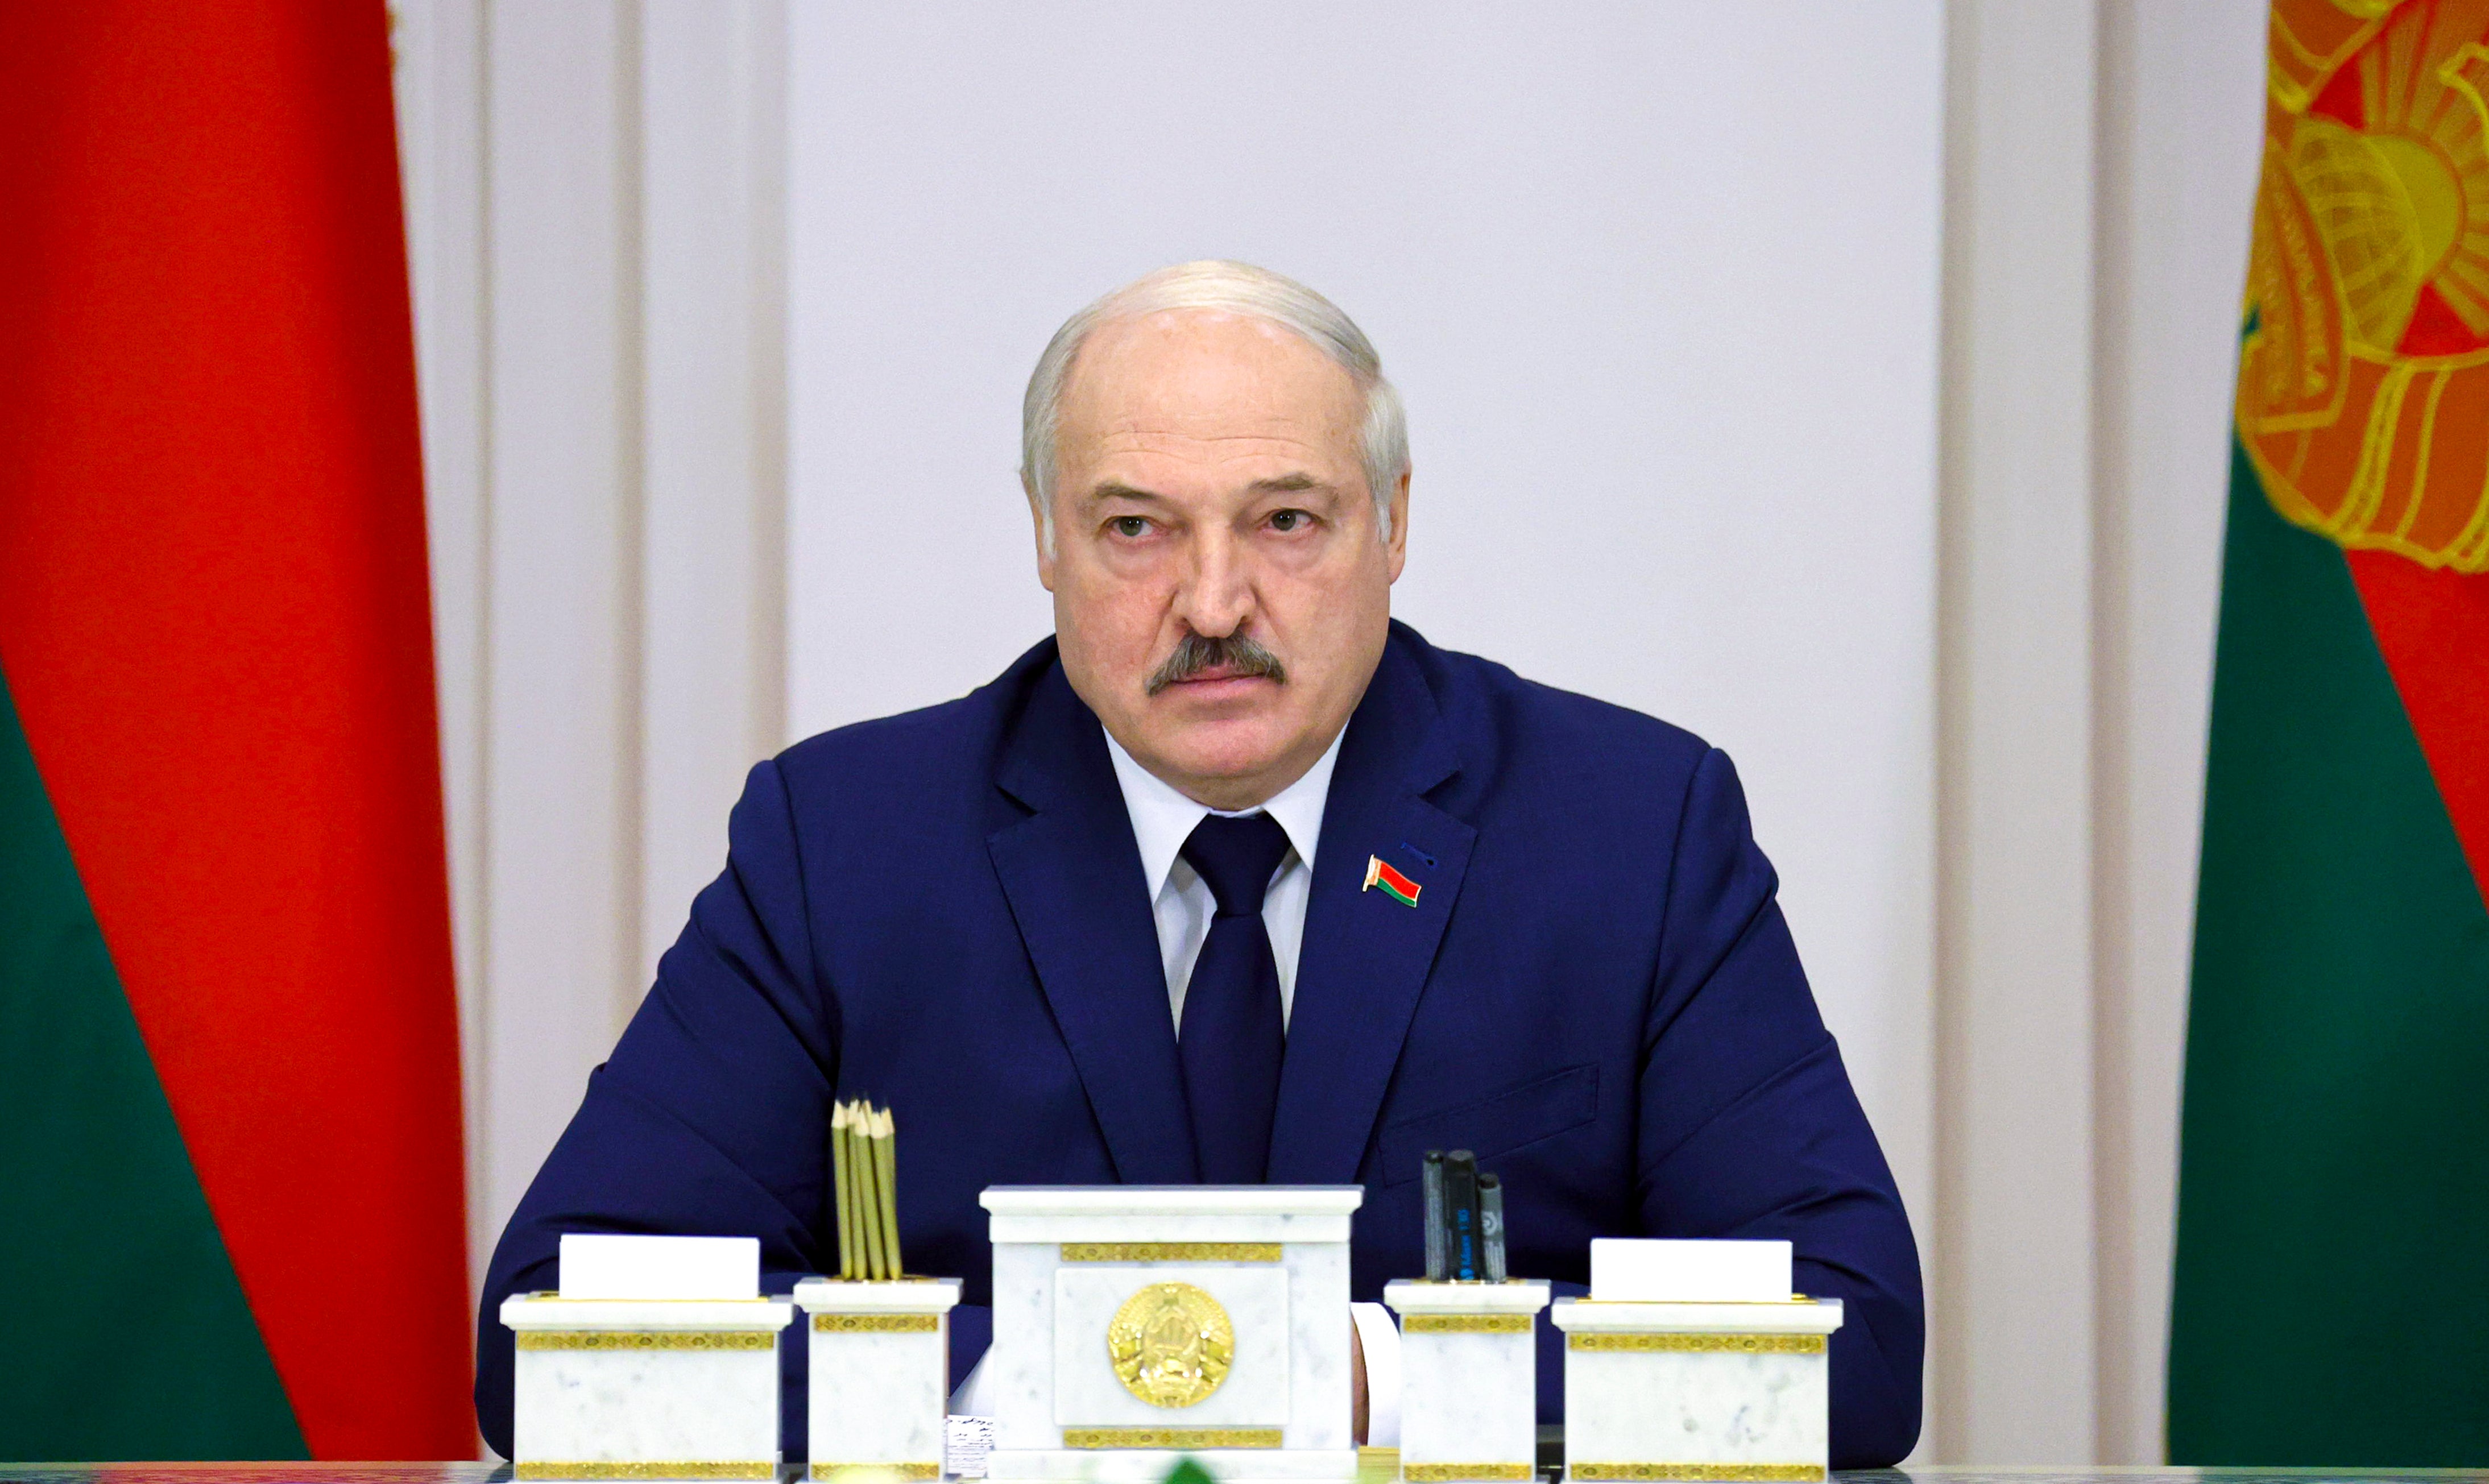 Belarusian president Alexander Lukashenko